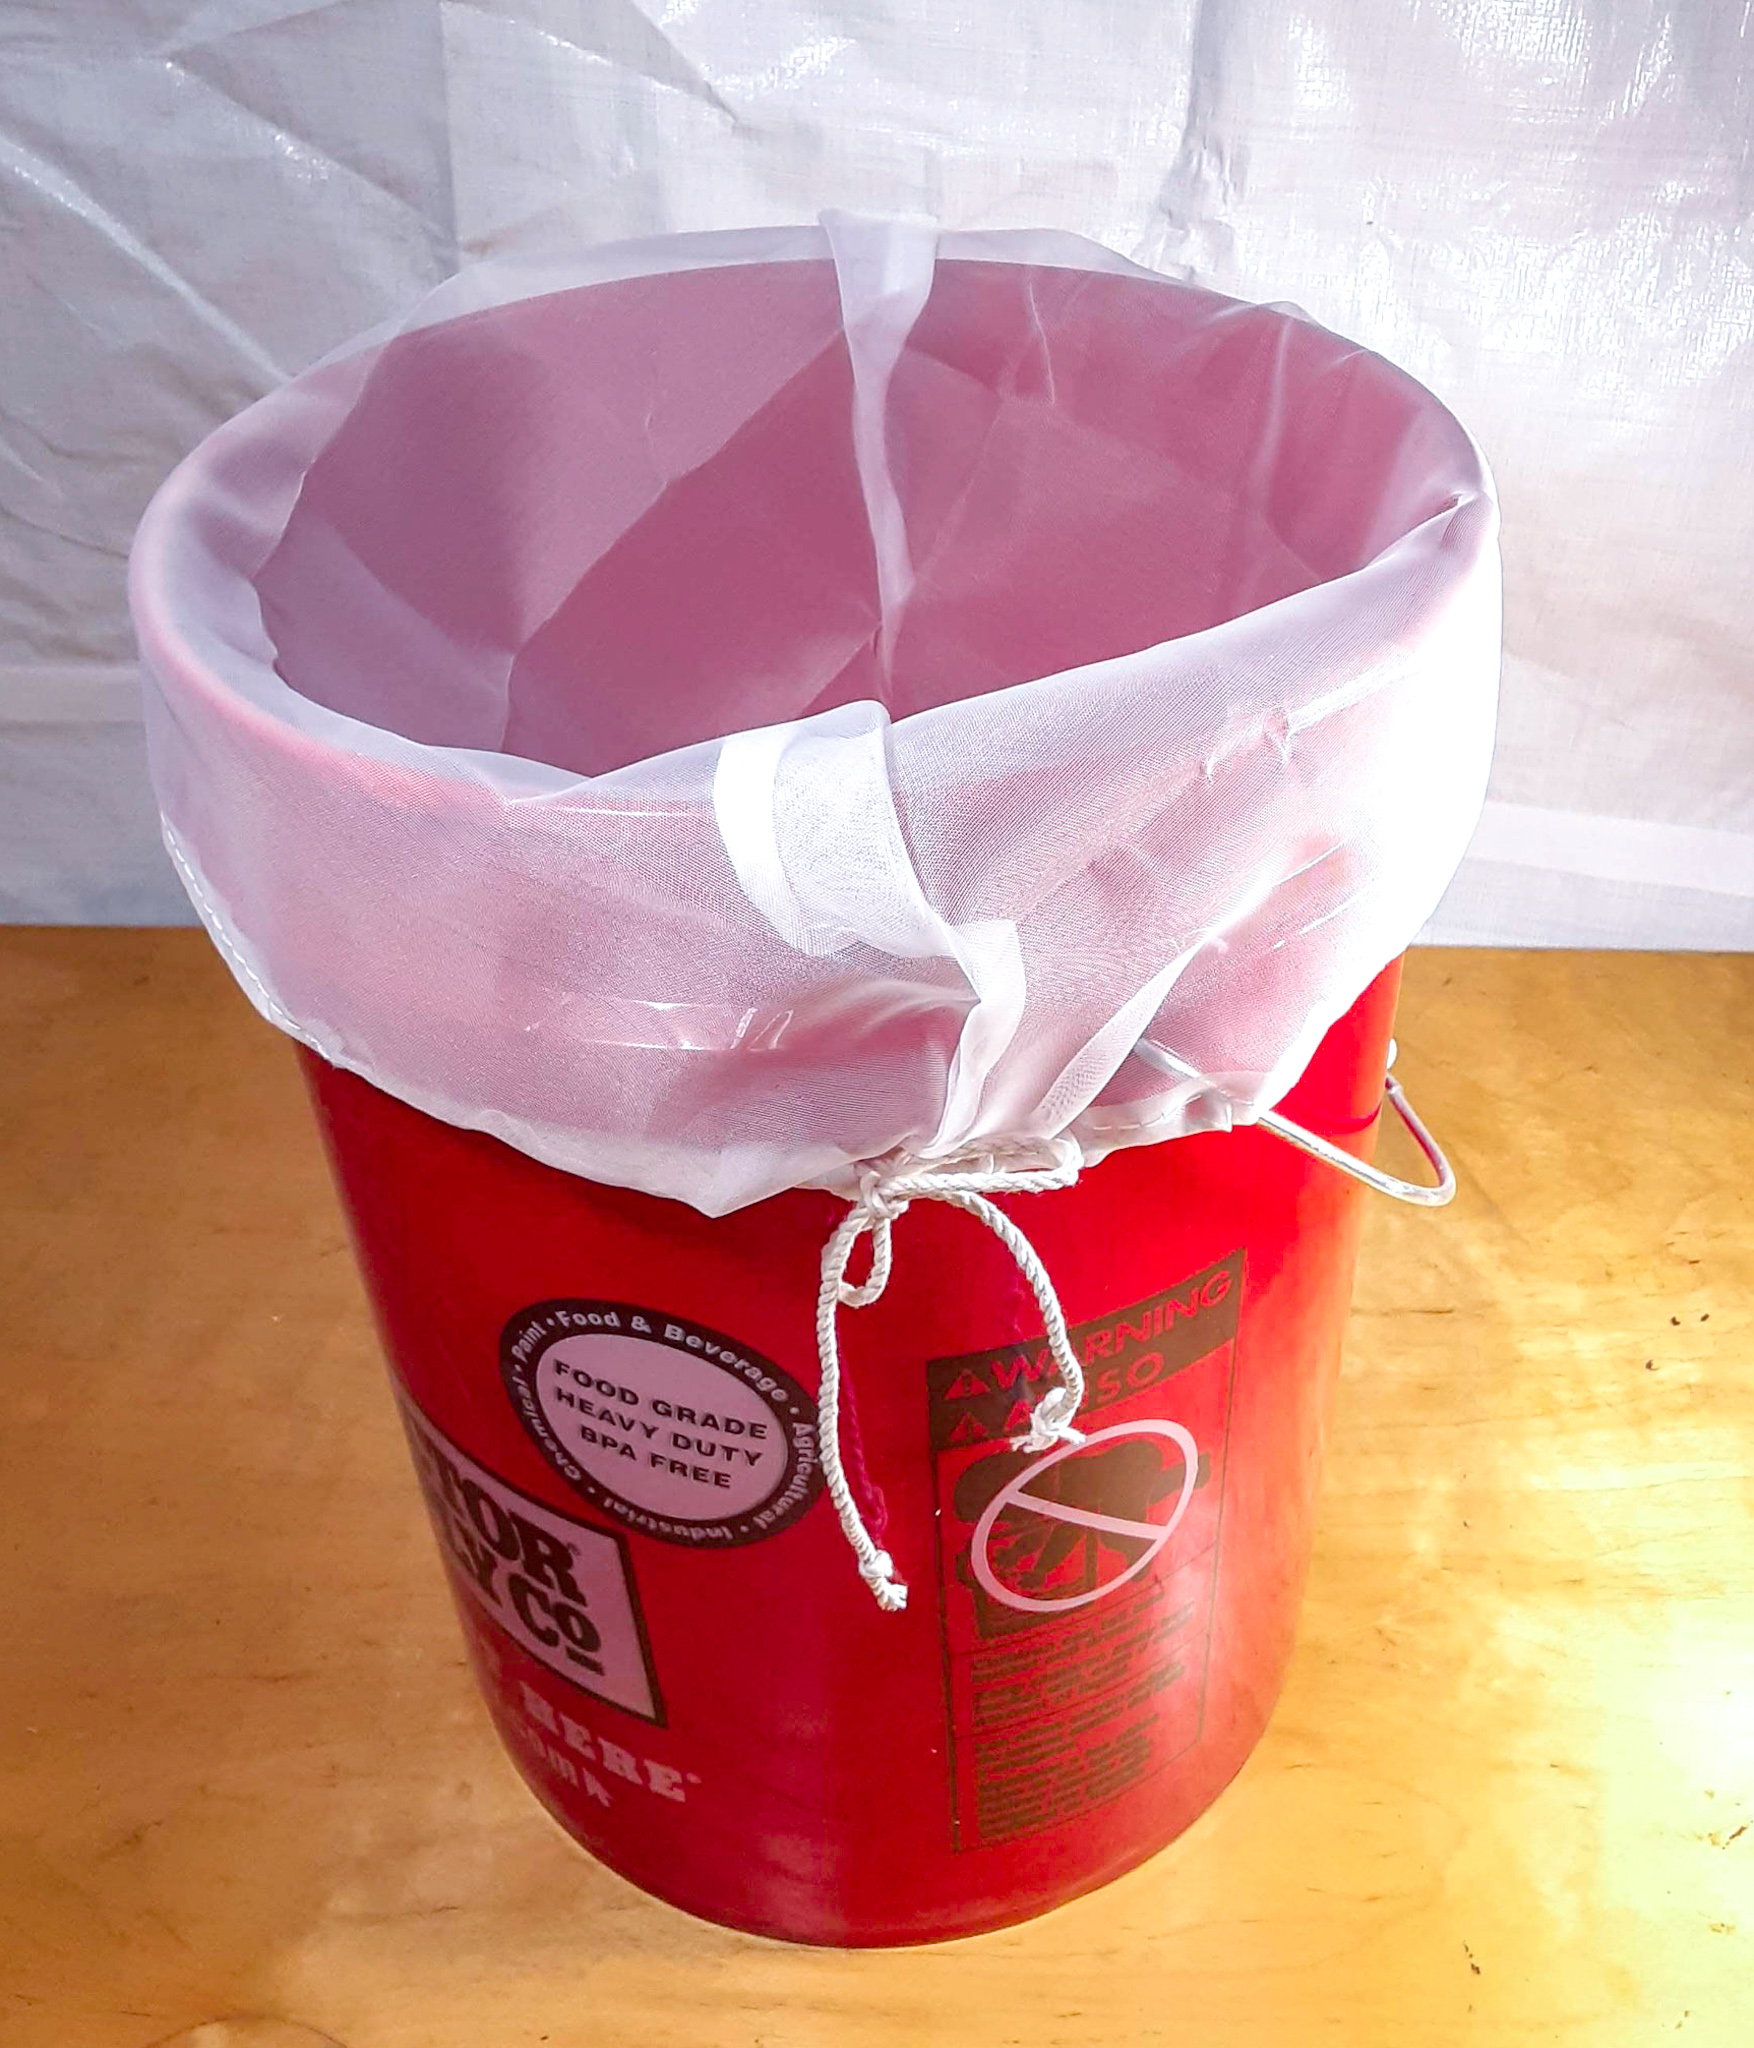 5 Gallon Filter Bag with draw string. Made of Food grade Nylon, Reusable  600 micron Mesh.